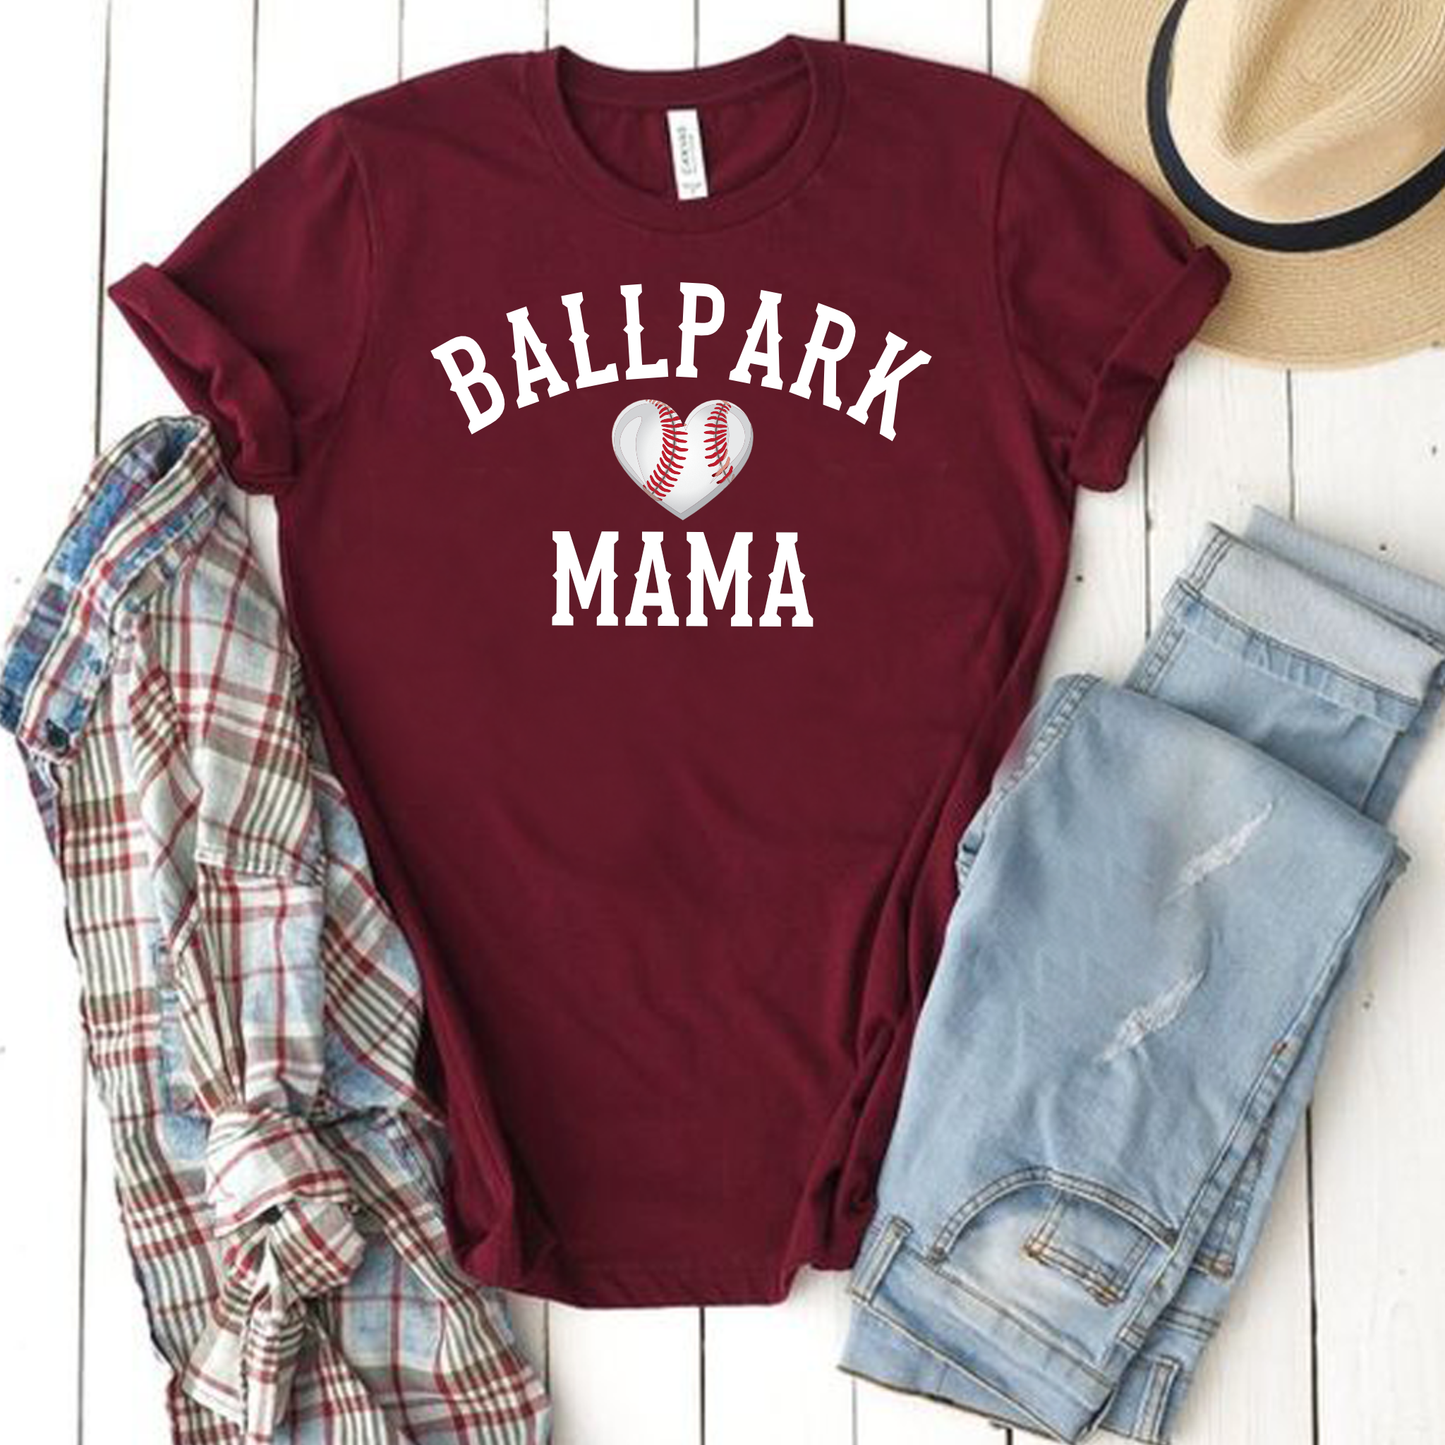 Ballpark Mama - Baseball Tee